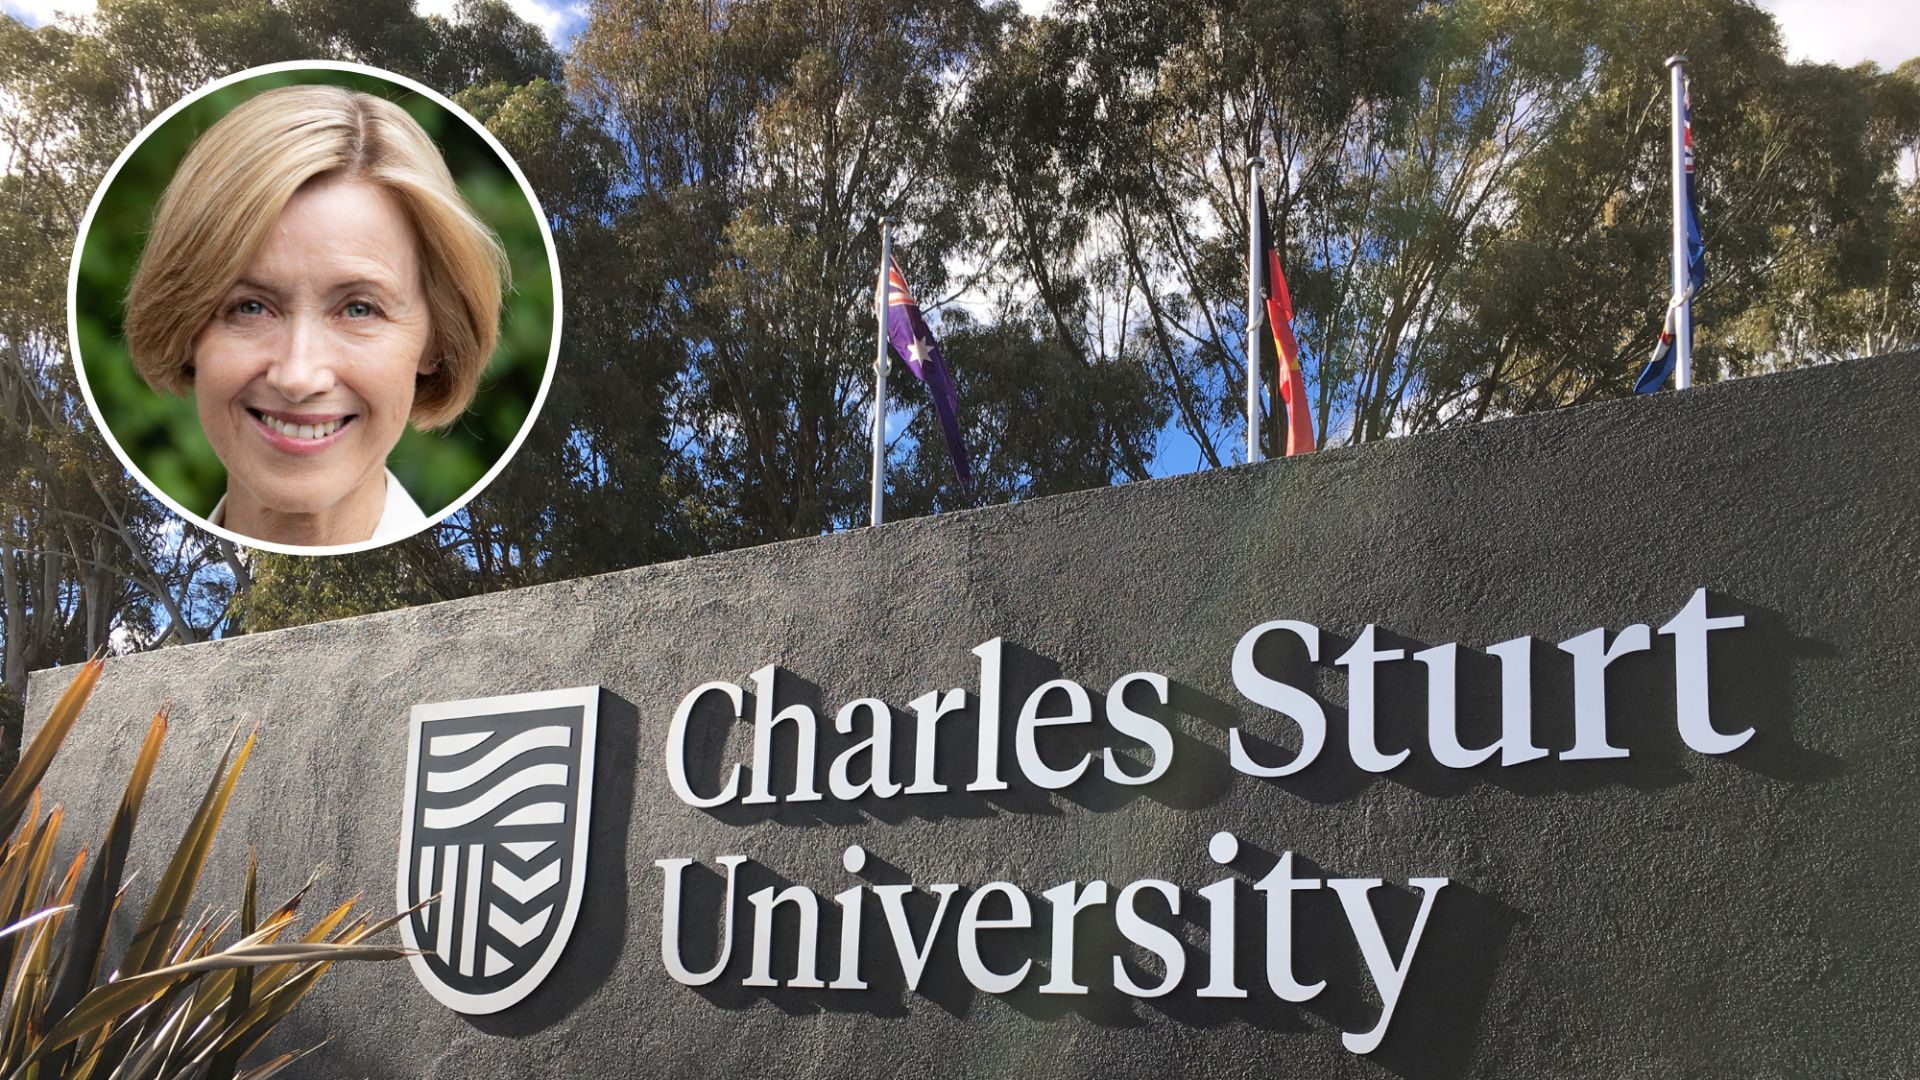 Charles Sturt joins prestigious James Martin Institute for Public Policy